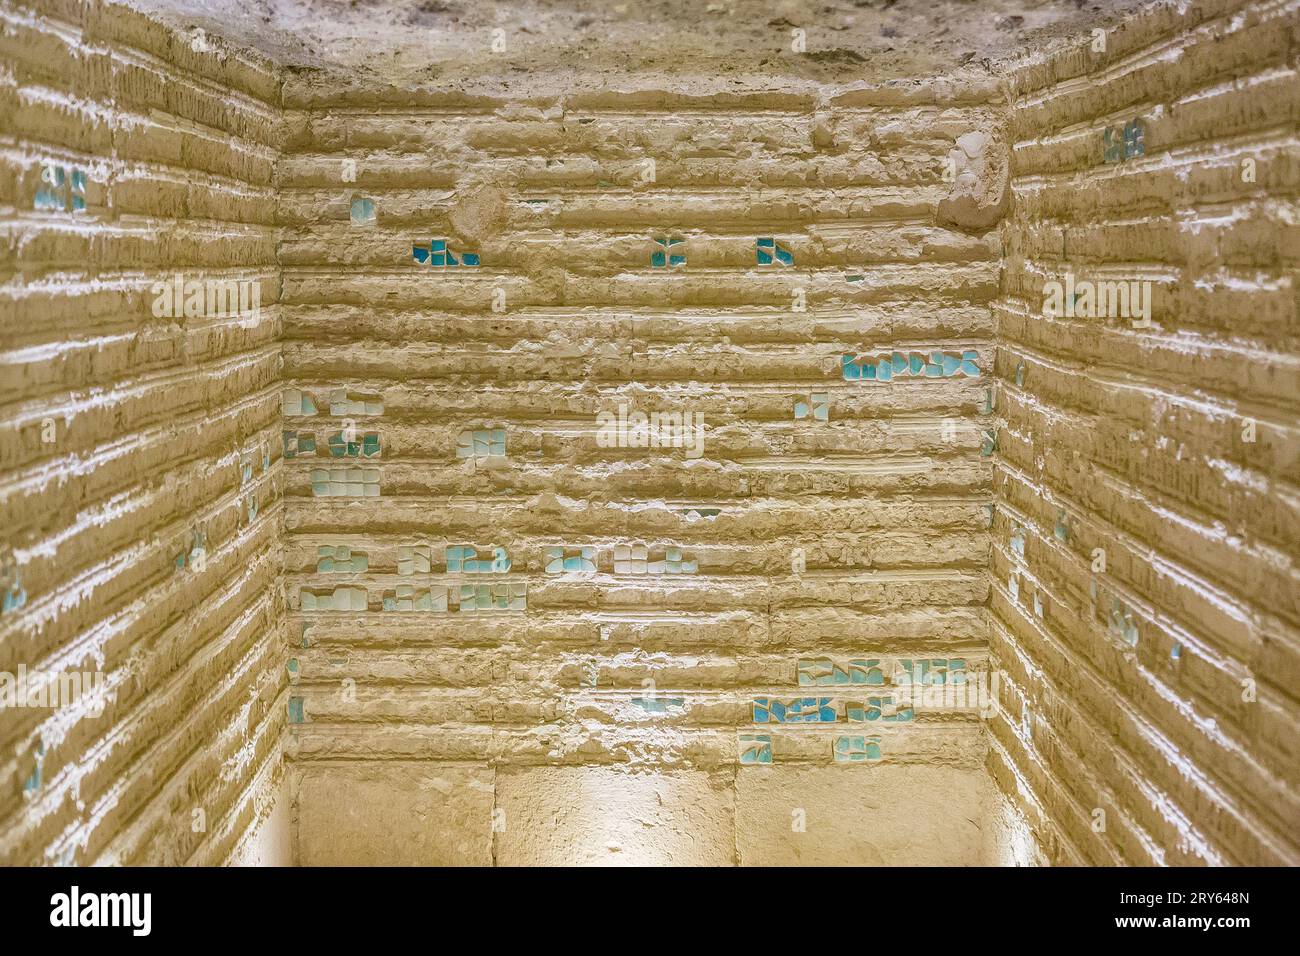 Egypt, Saqqara, Djoser pyramid, North Tomb, corridors with remains of blue faience tiles. Stock Photo